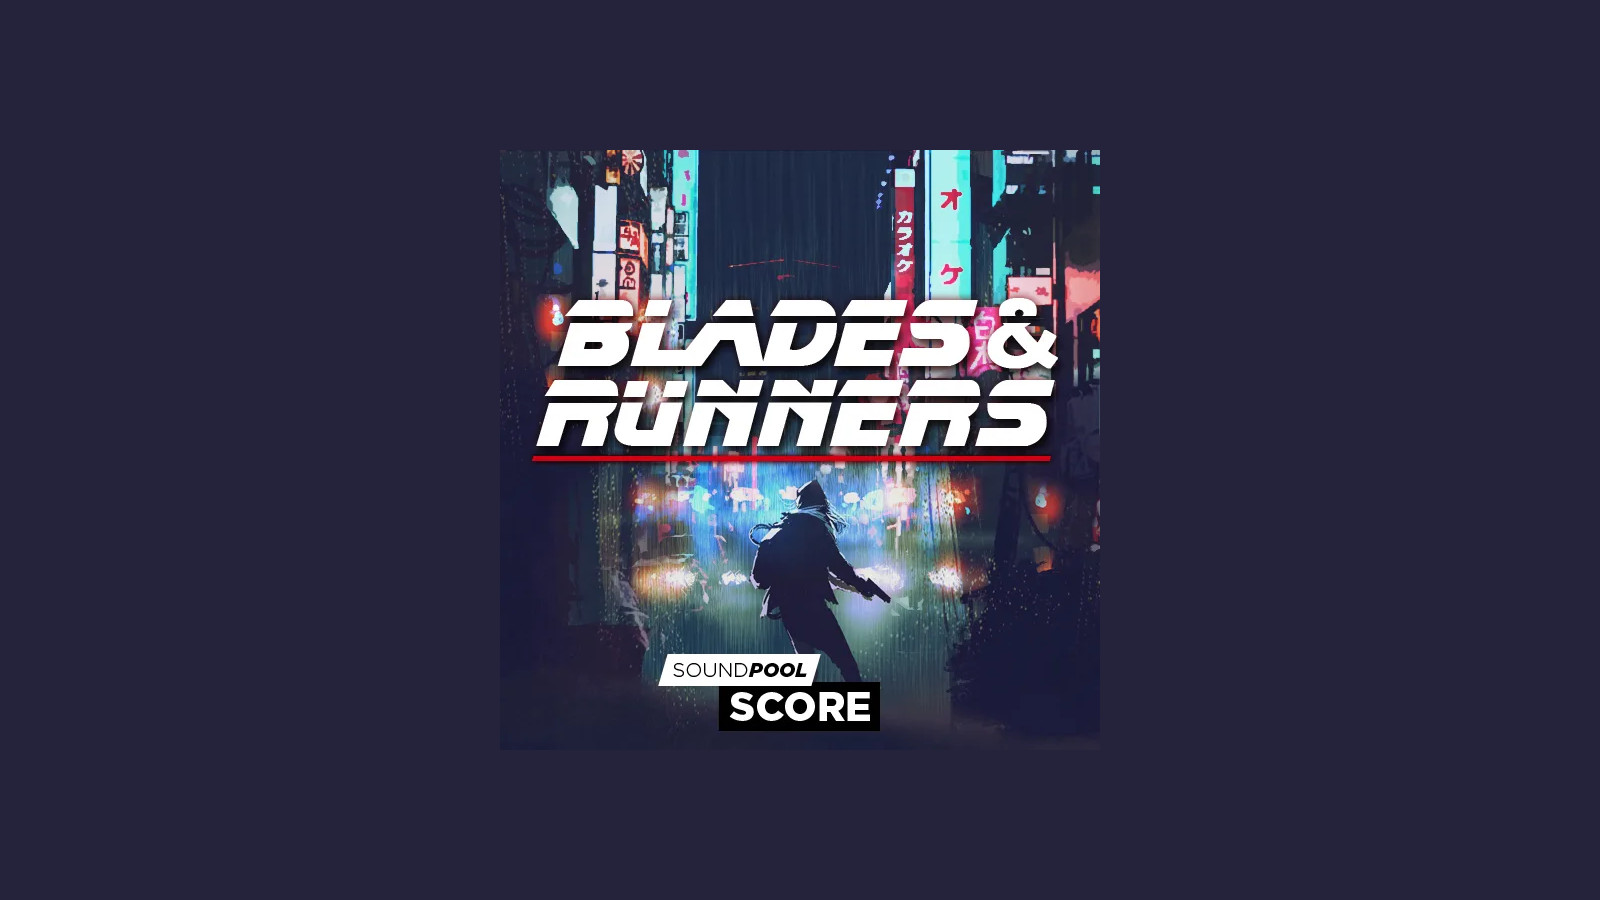 MAGIX Soundpool Blades & Runners ProducerPlanet CD Key